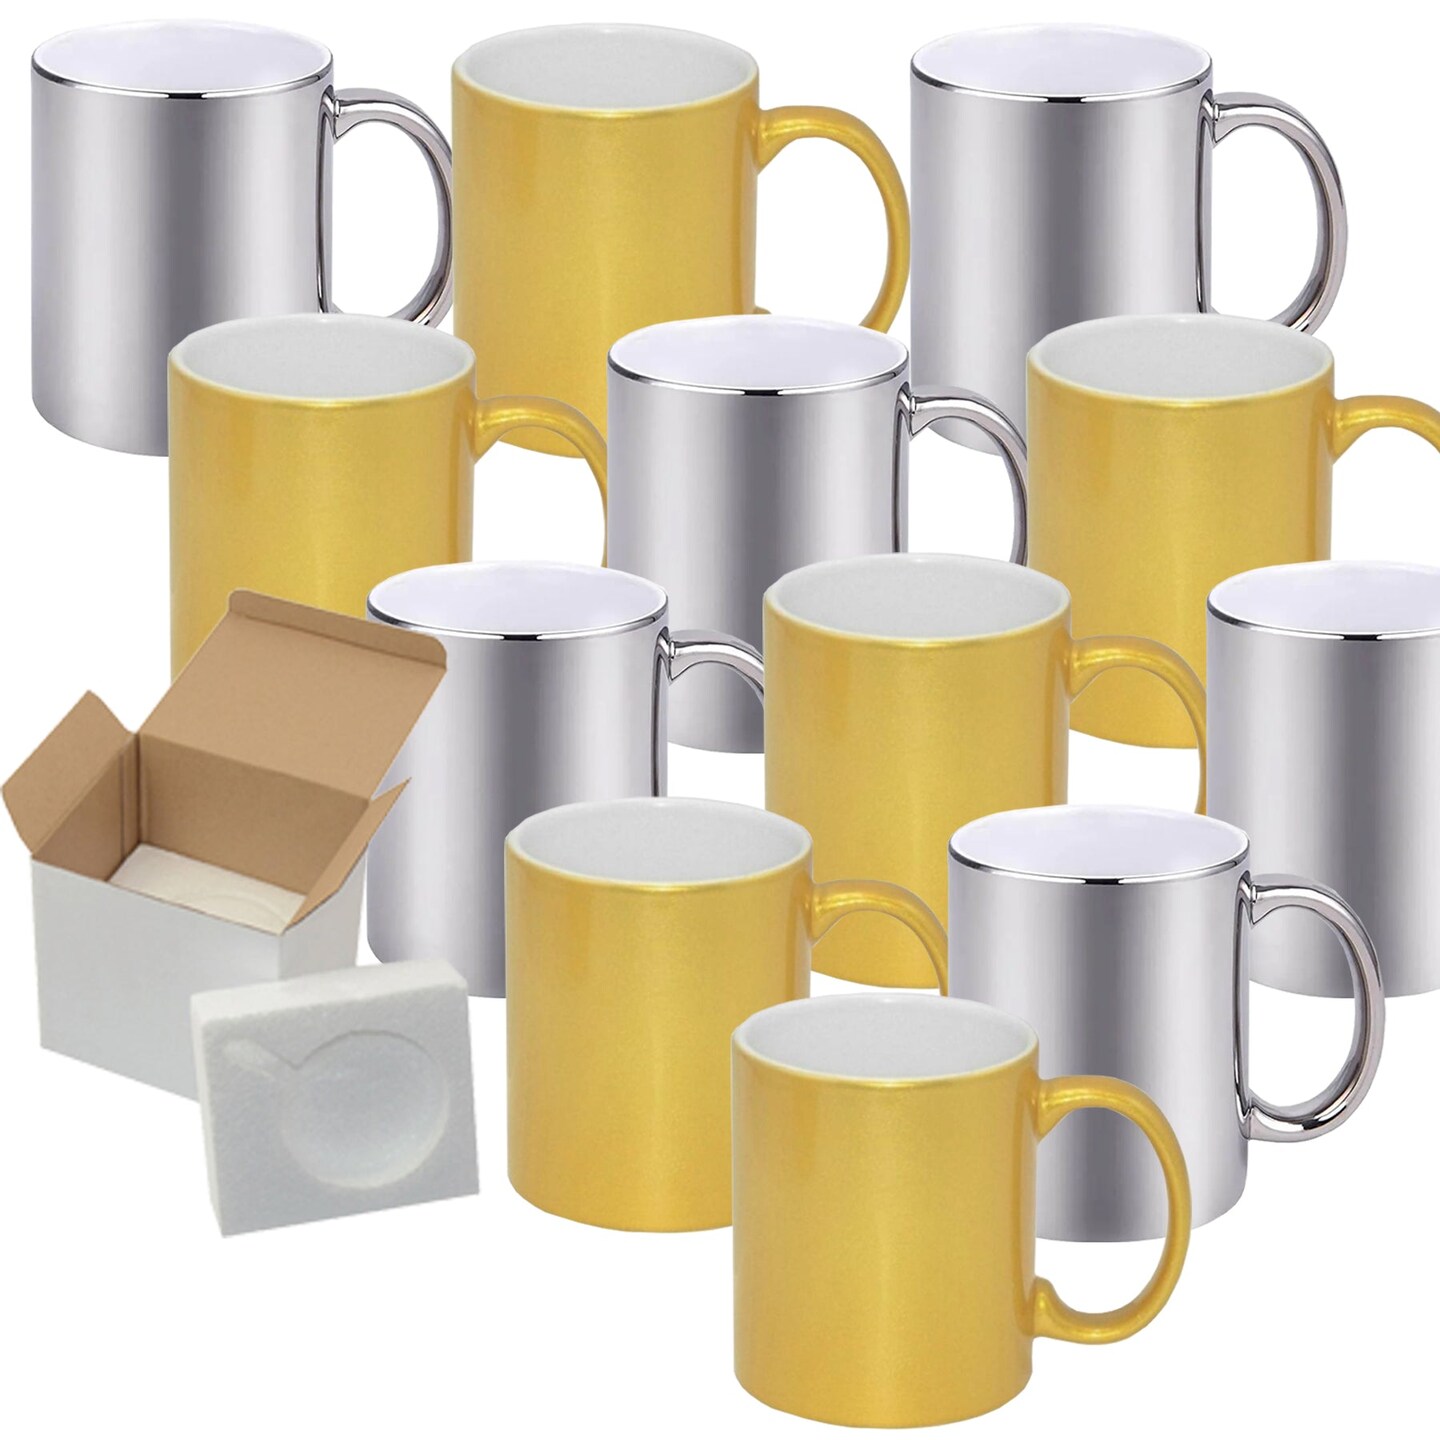 11oz Yellow Two Tone Ceramic Sublimation Coffee Mug